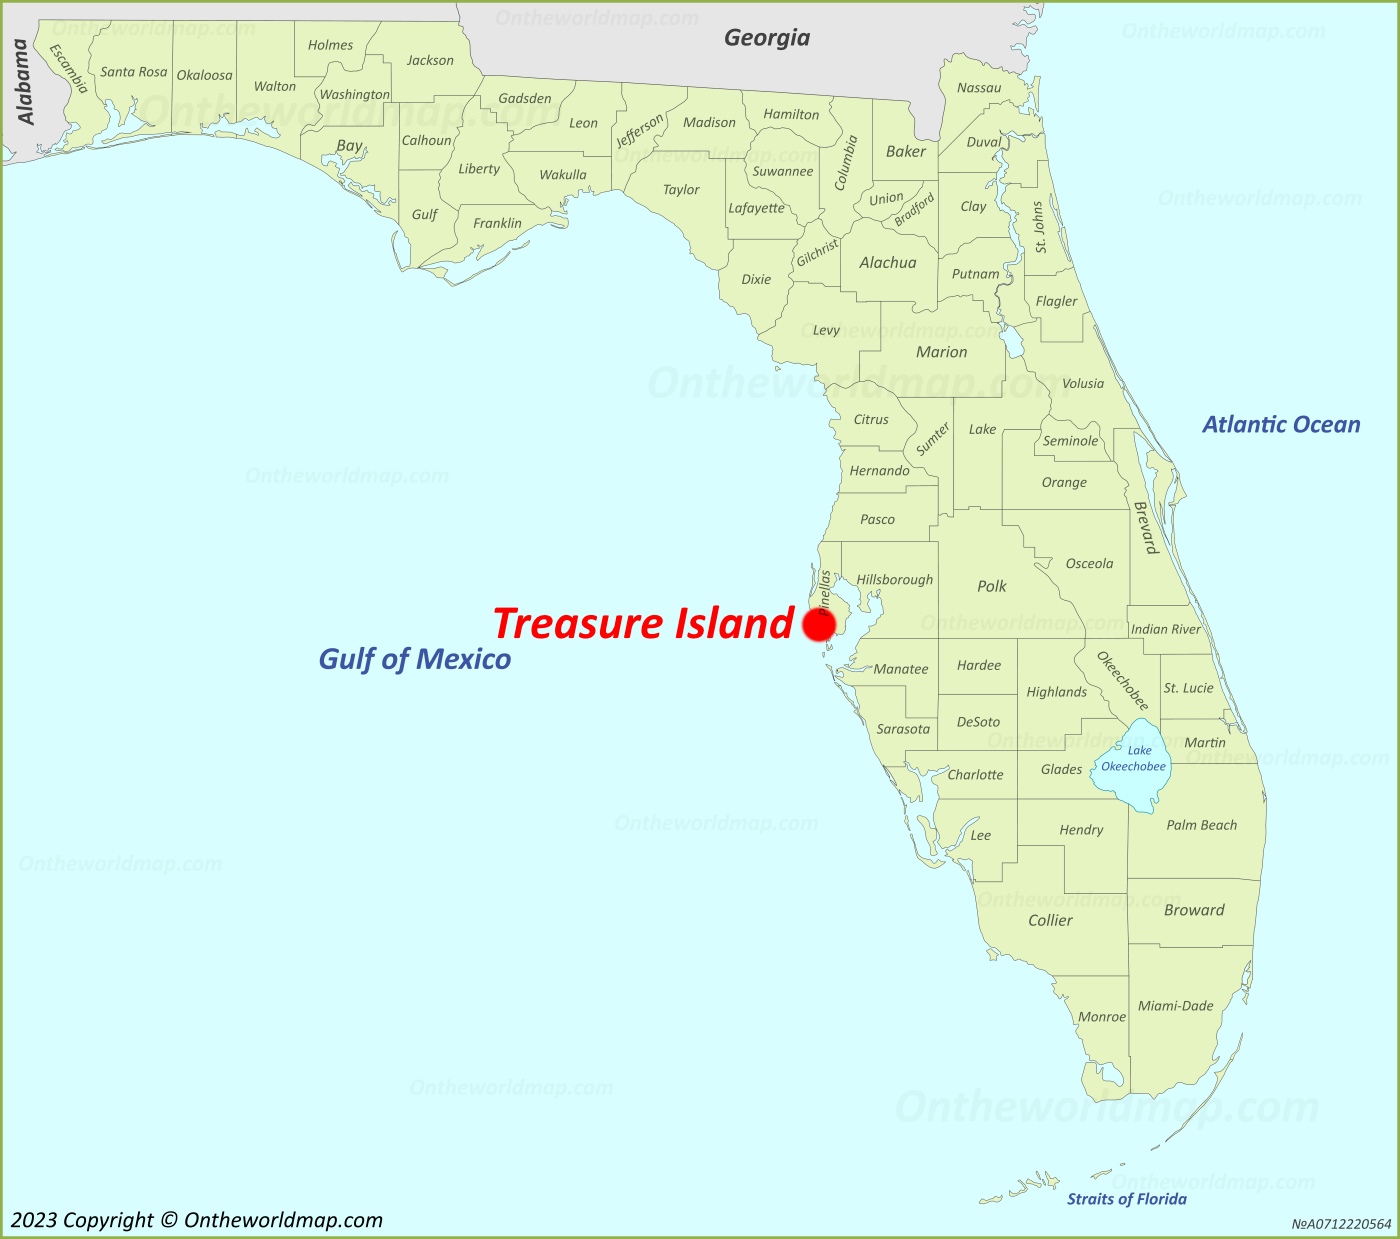 Treasure Island Location On The Florida Map